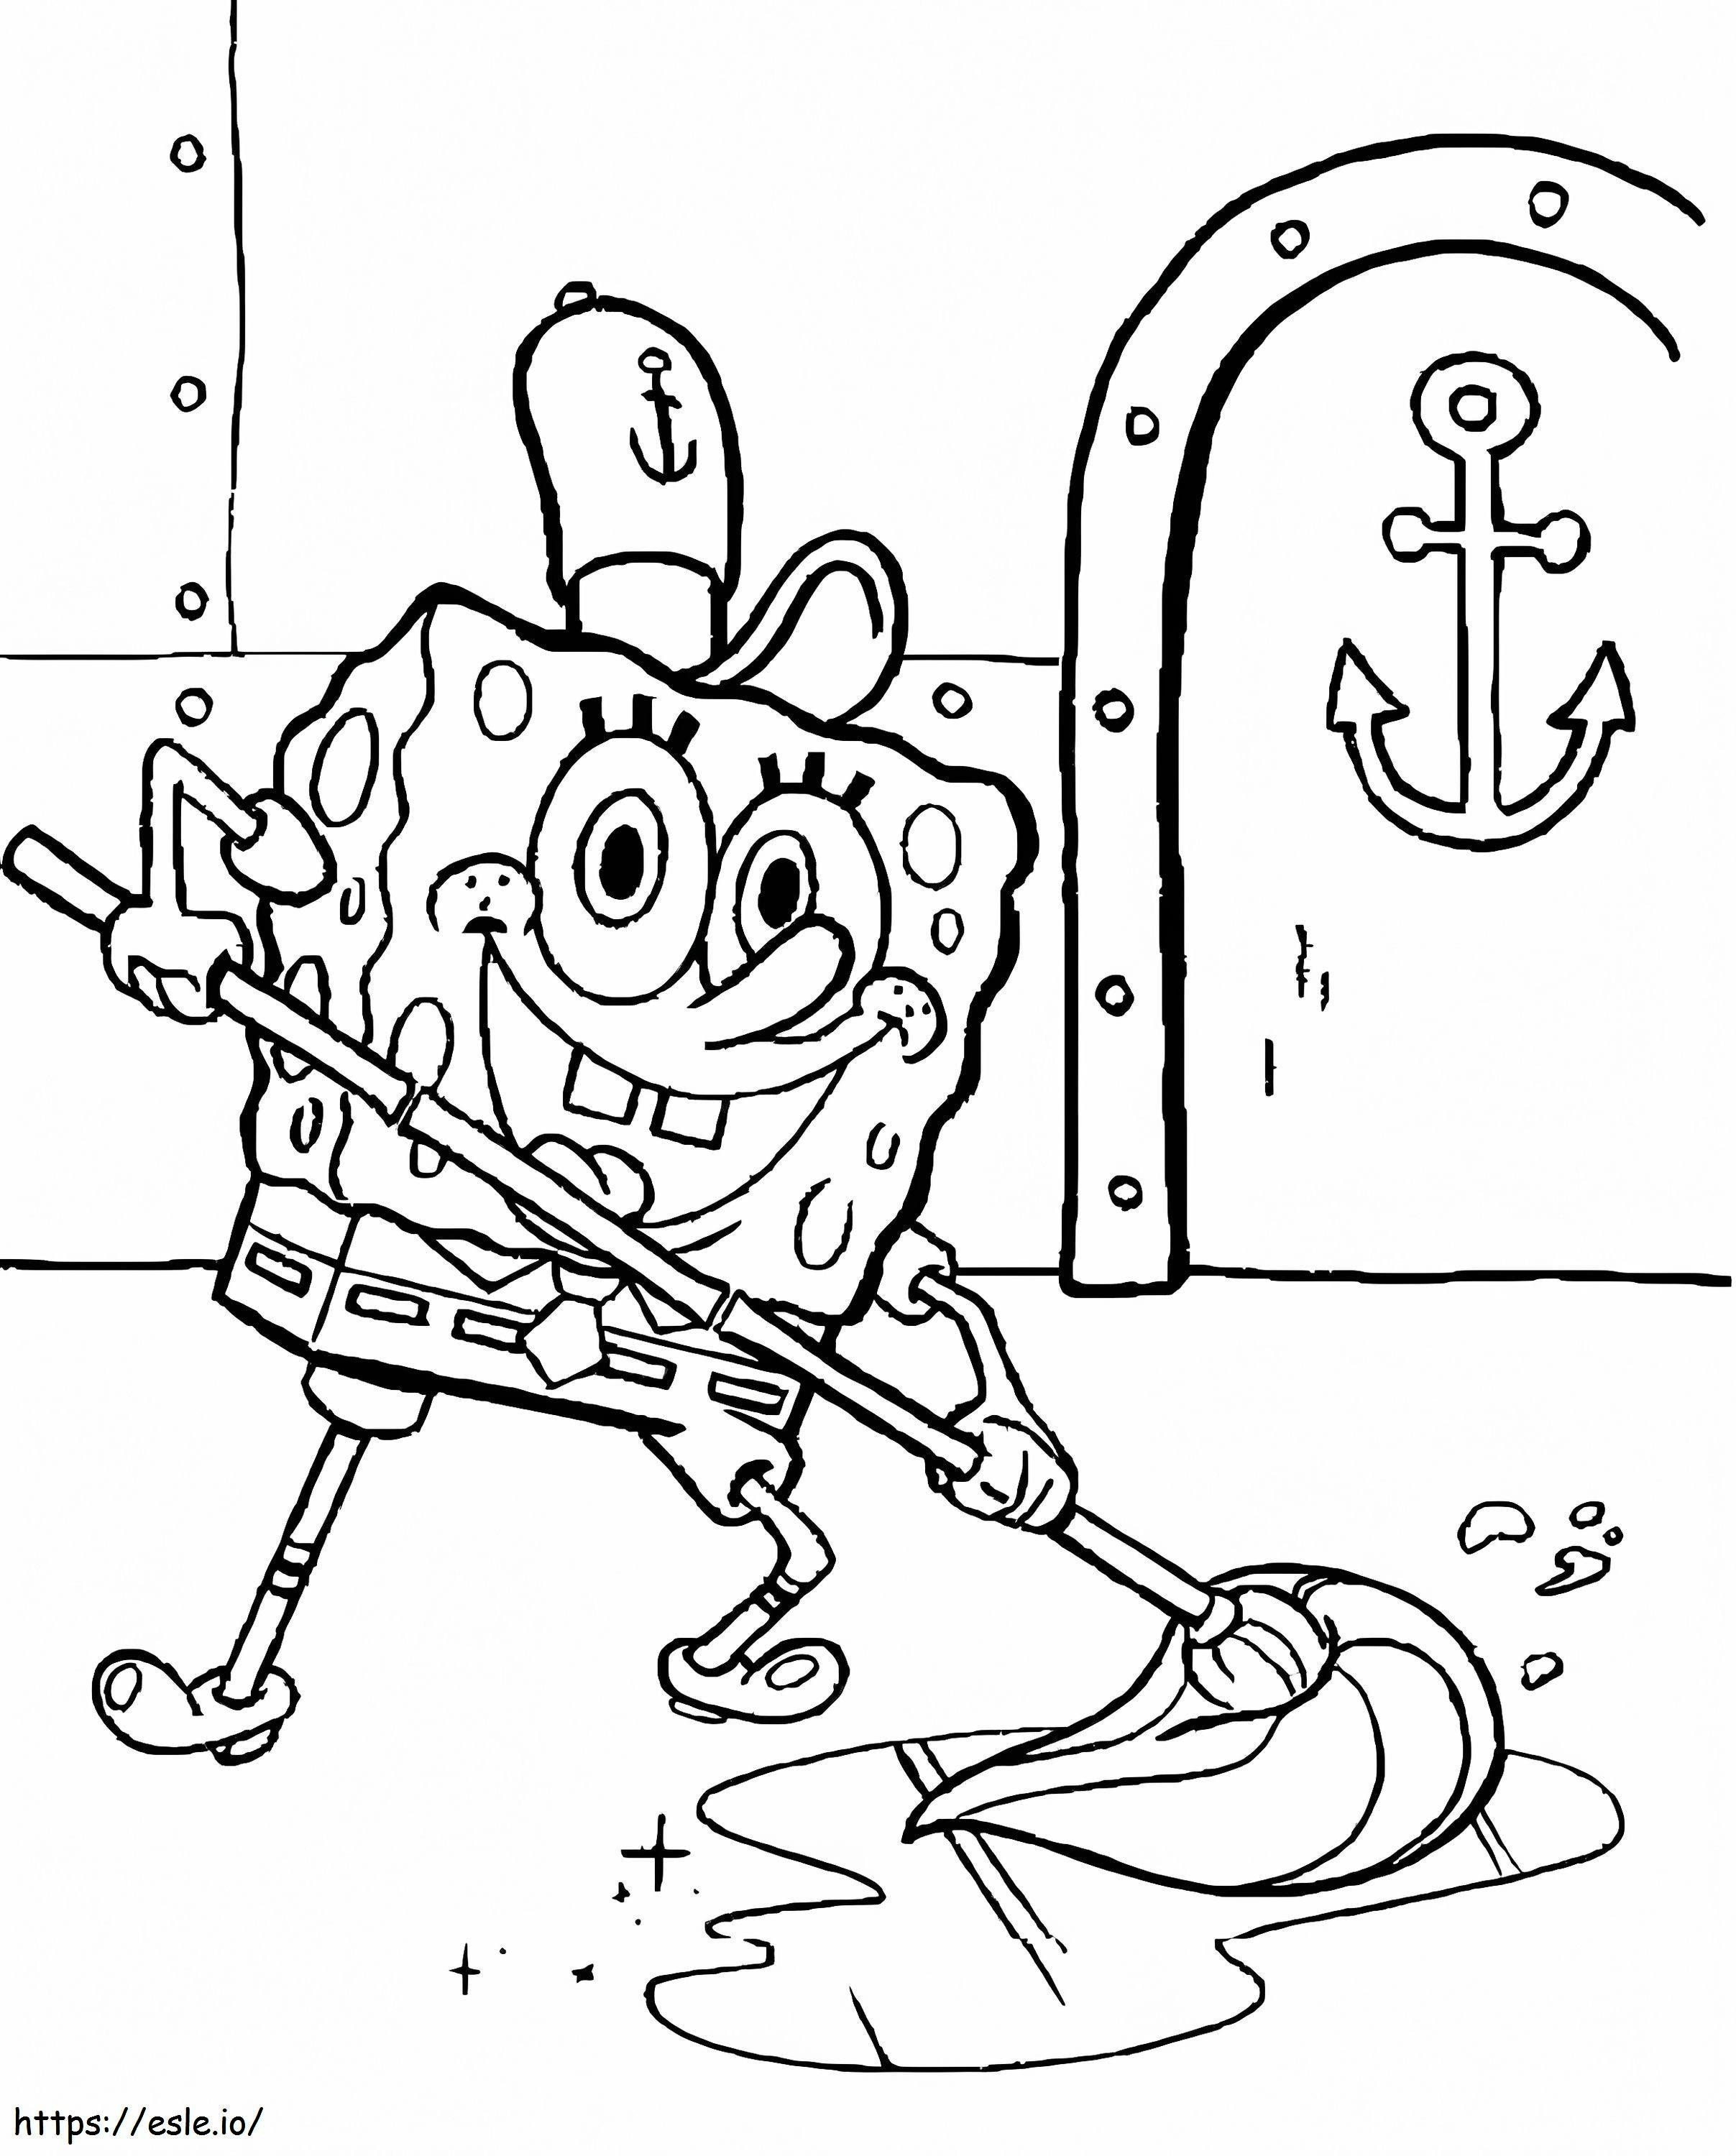 SpongeBob Cleaning Floor coloring page